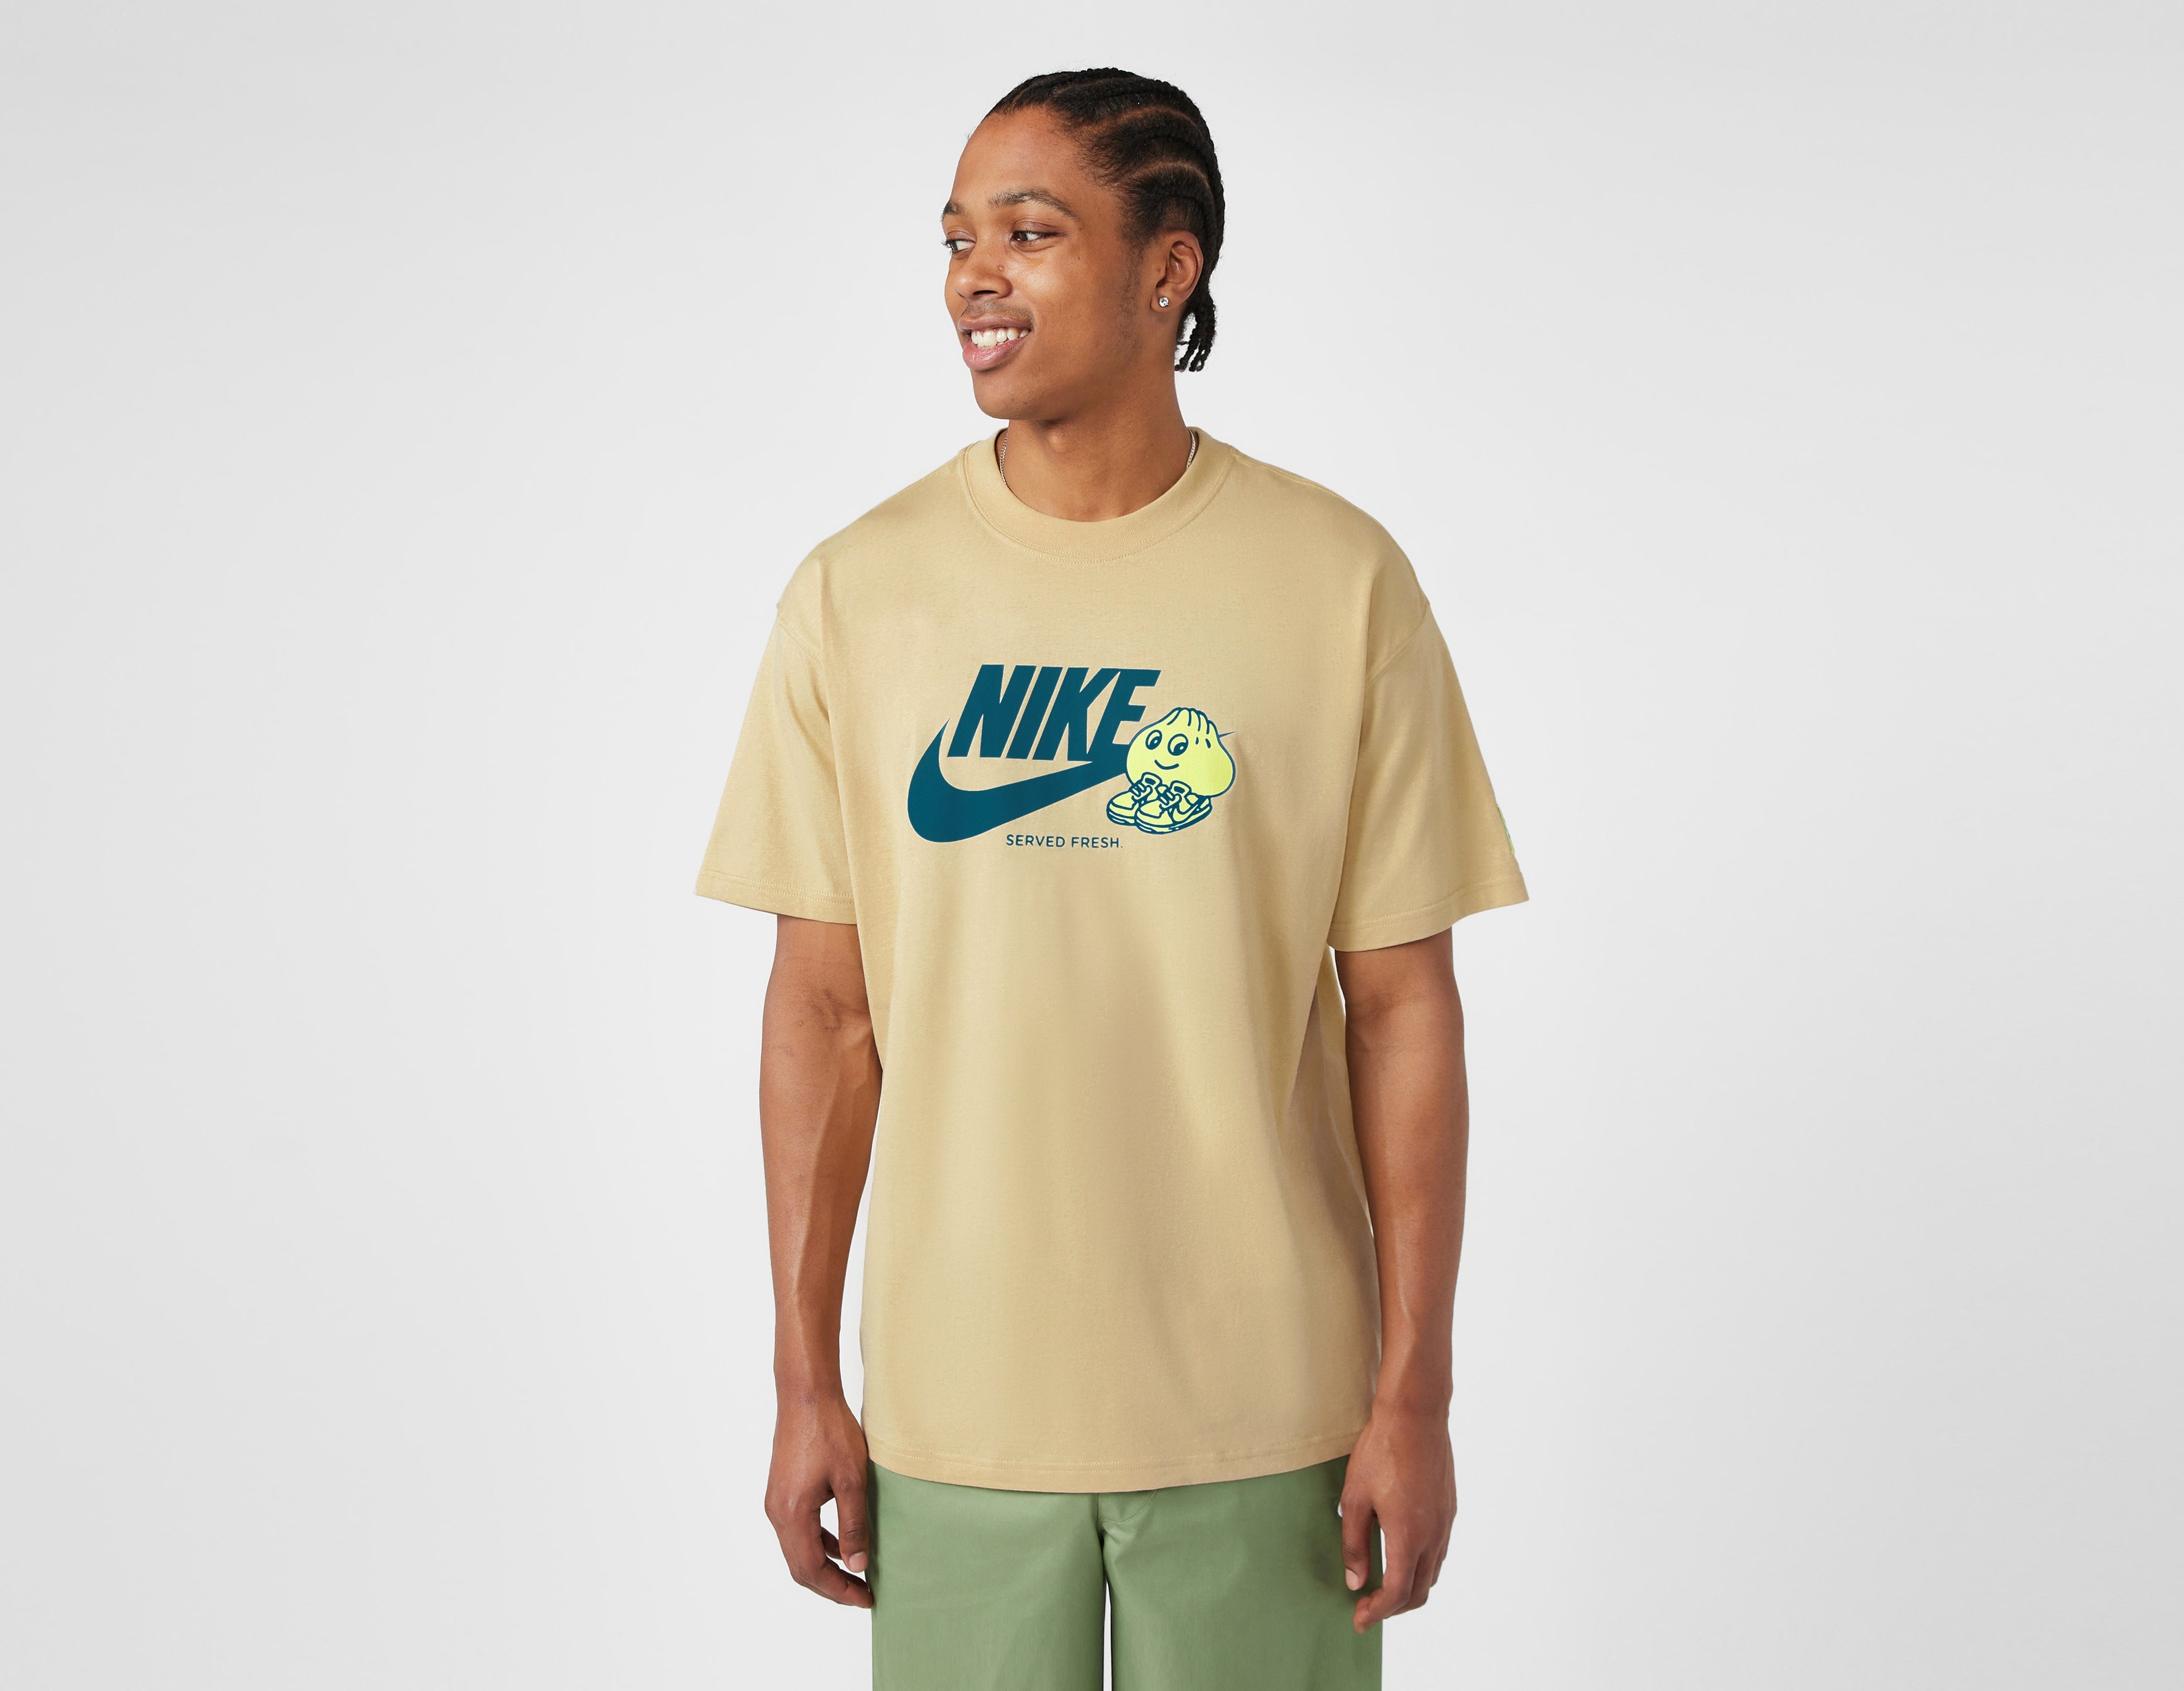 Apropiado Emigrar Pagar tributo Punipunijapan? | Shirt - Brown Nike Dumpling T - nike air vapormax evo  dc9992 002 relese date info